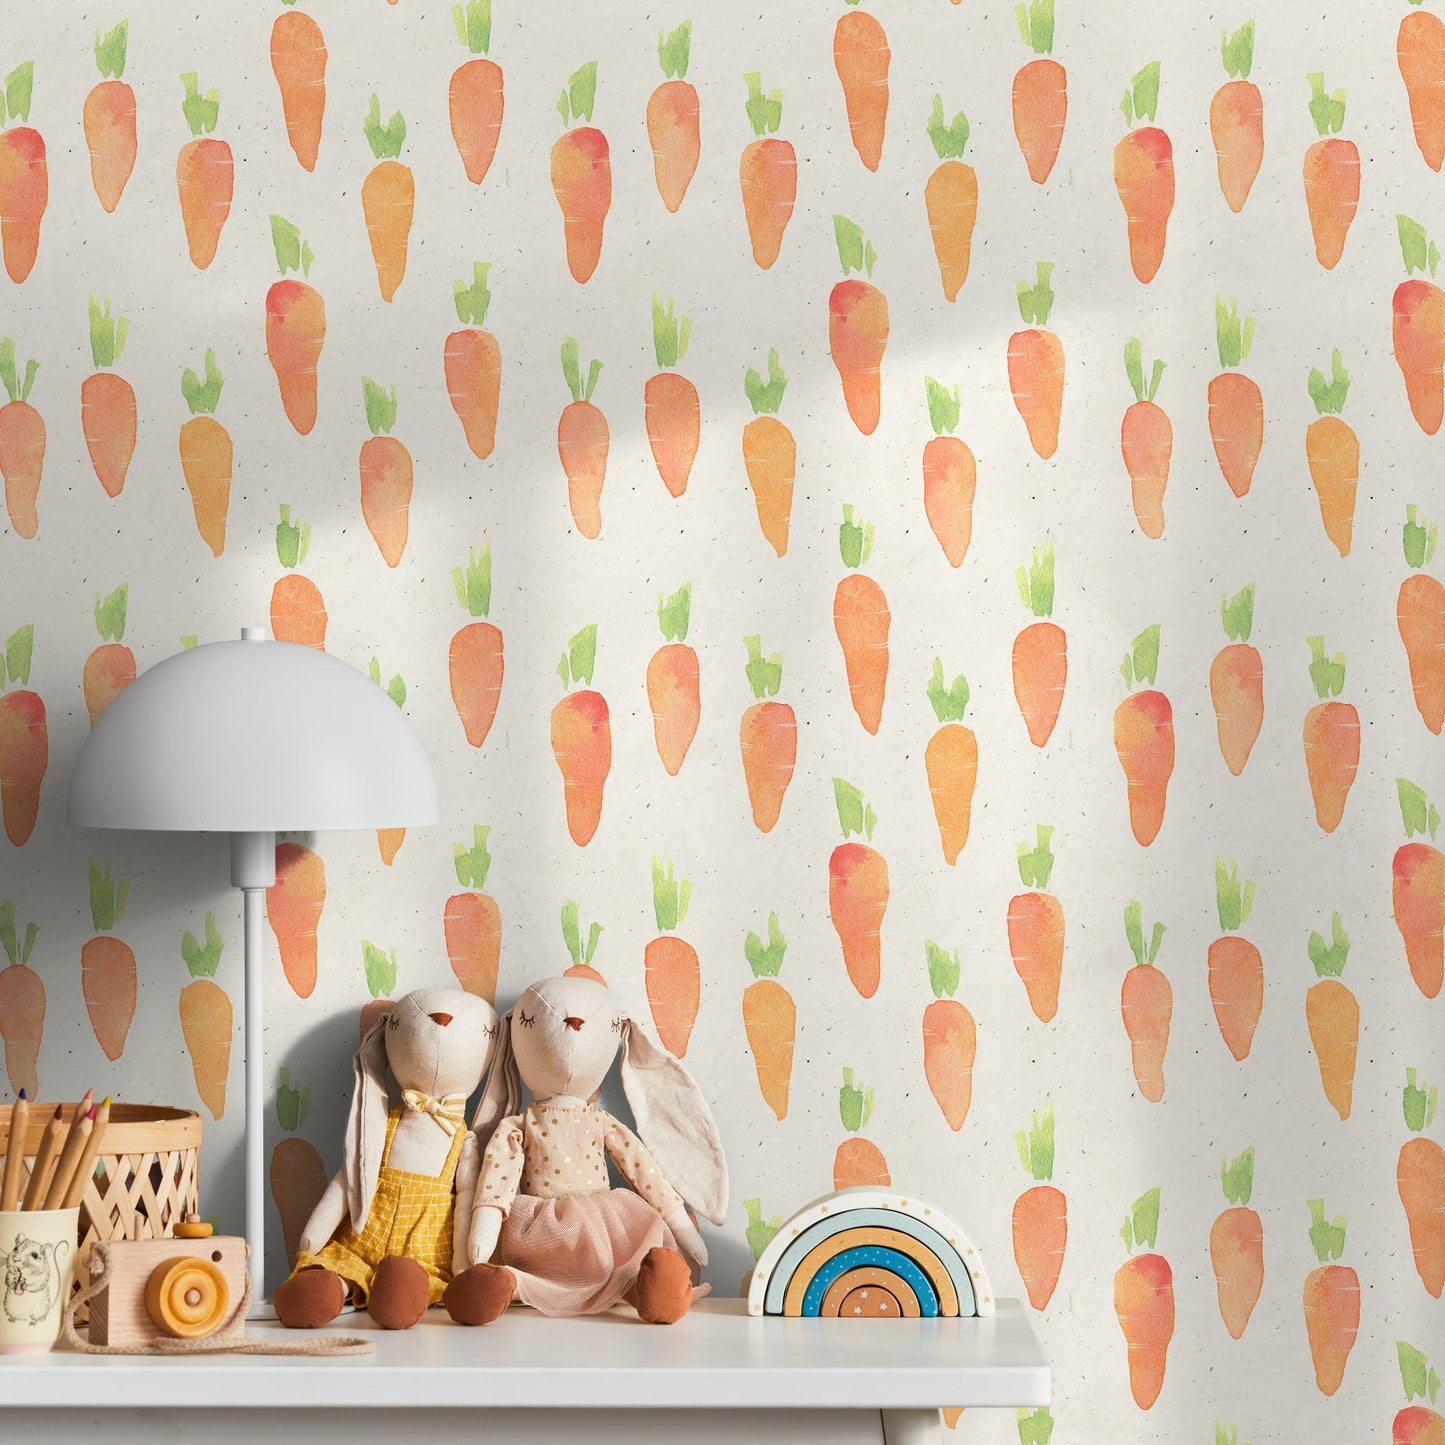 Carrots Wallpaper, Nursery Wallpaper, Peel and Stick Wallpaper, Baby Wallpaper, New Born, Removable, Wall Paper Removable, Wallpaper - A312